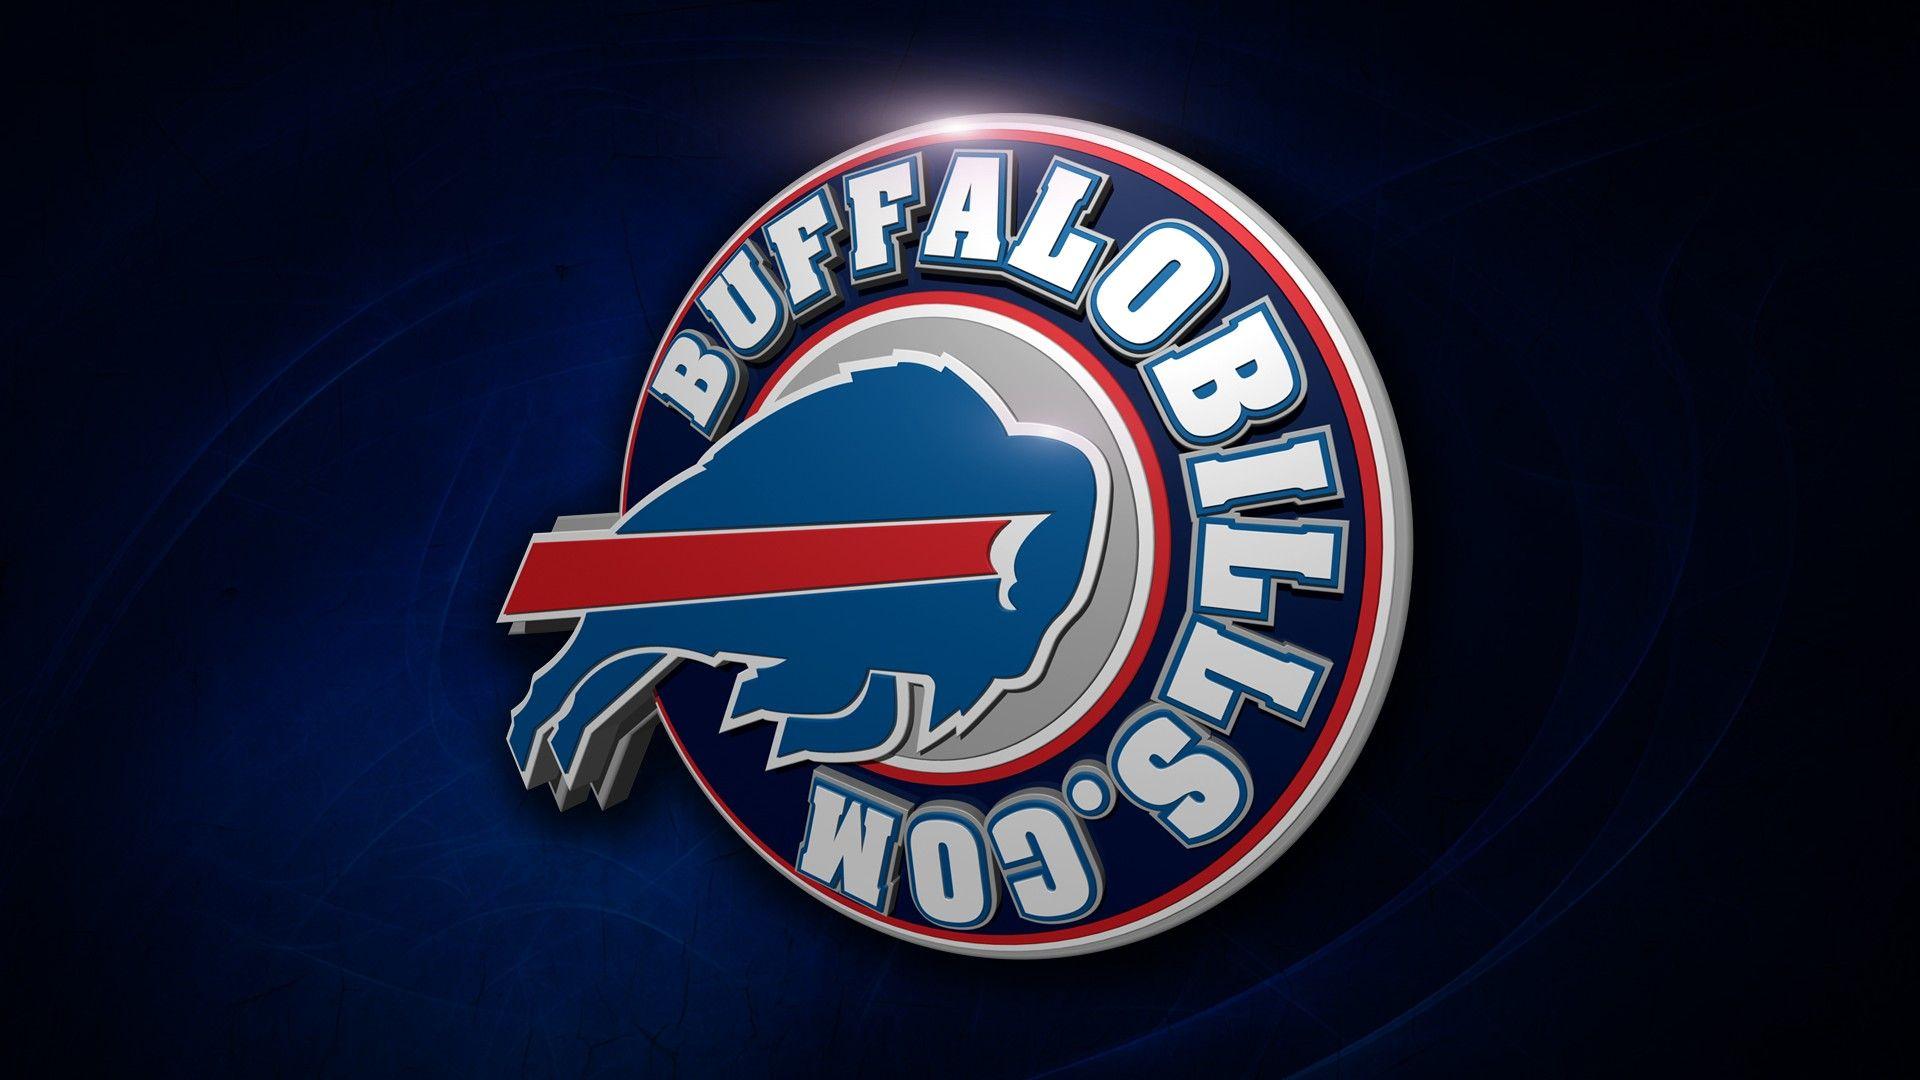 Buffalo Bills HD Wallpaper NFL Football Wallpaper. Buffalo bills logo, Buffalo bills, Nfl football wallpaper